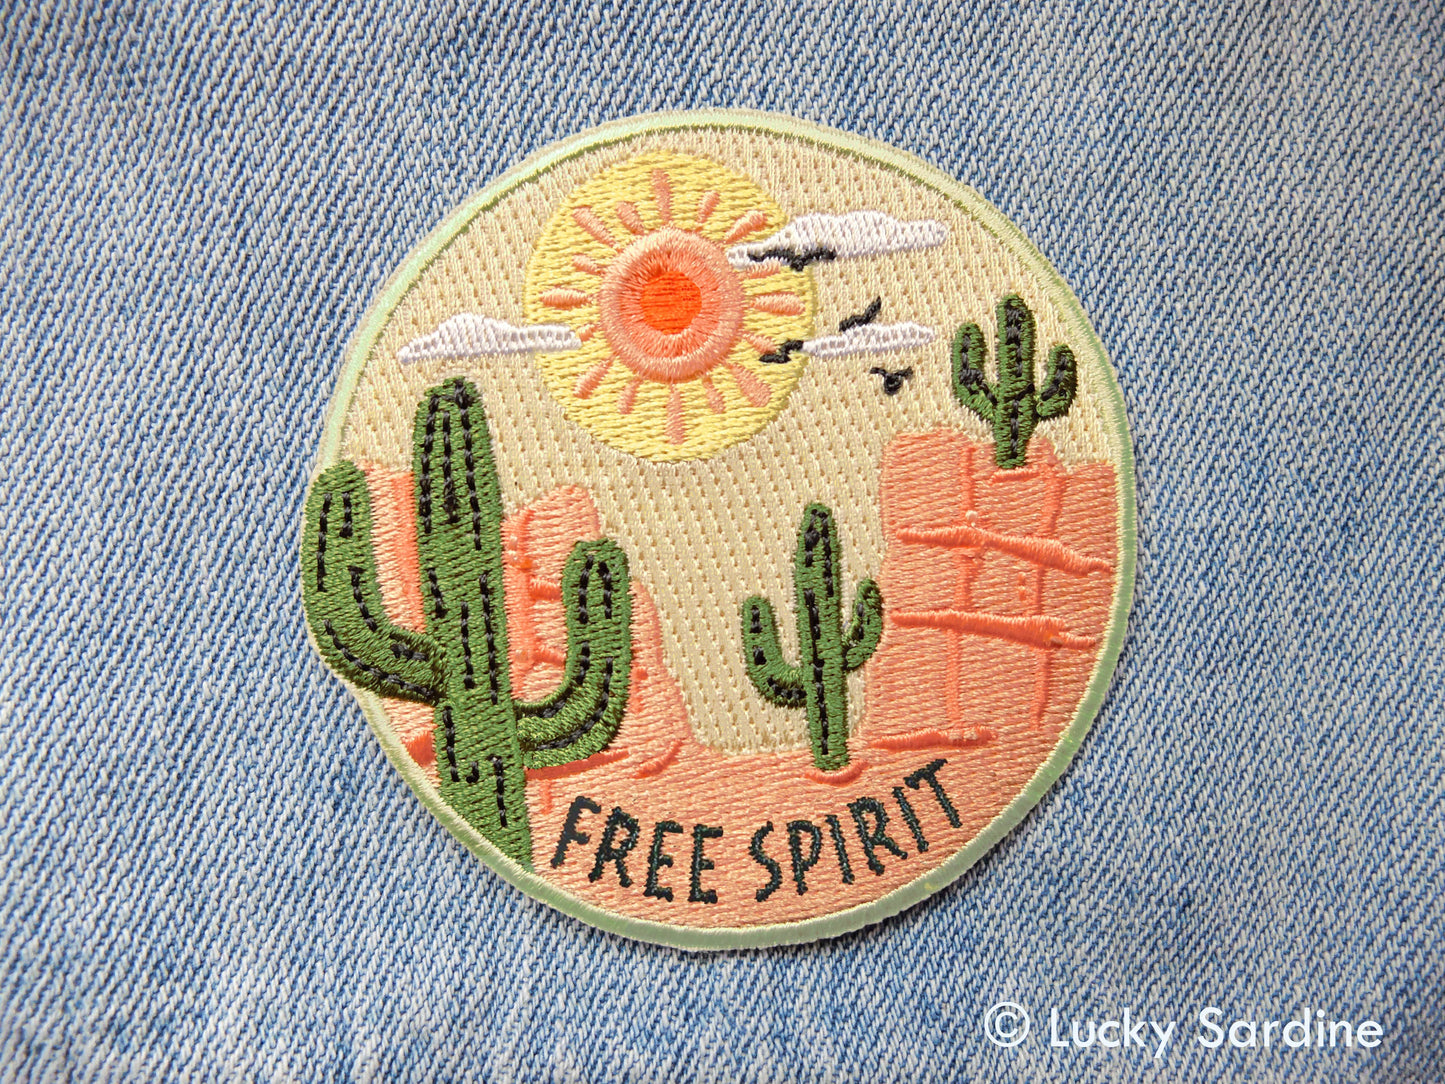 FREE SPIRIT, Desert Embroidered Patch